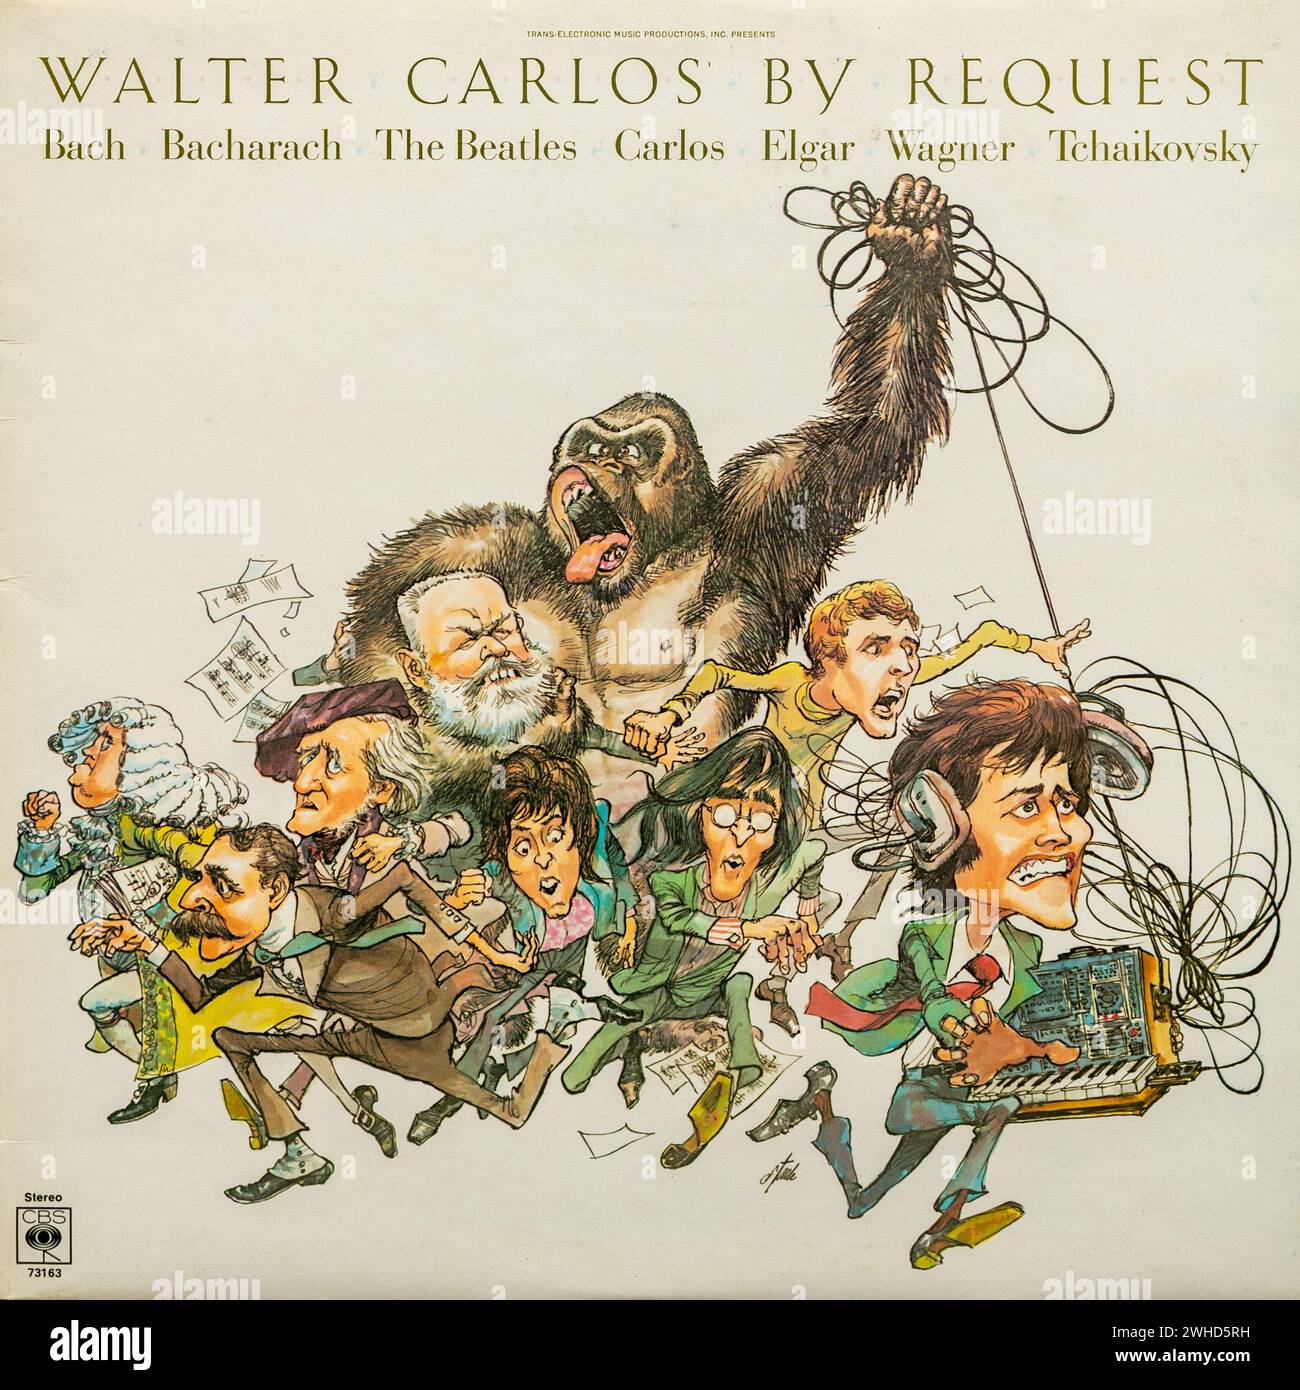 Walter Carlos By Request vinyl LP record album cover Stock Photo